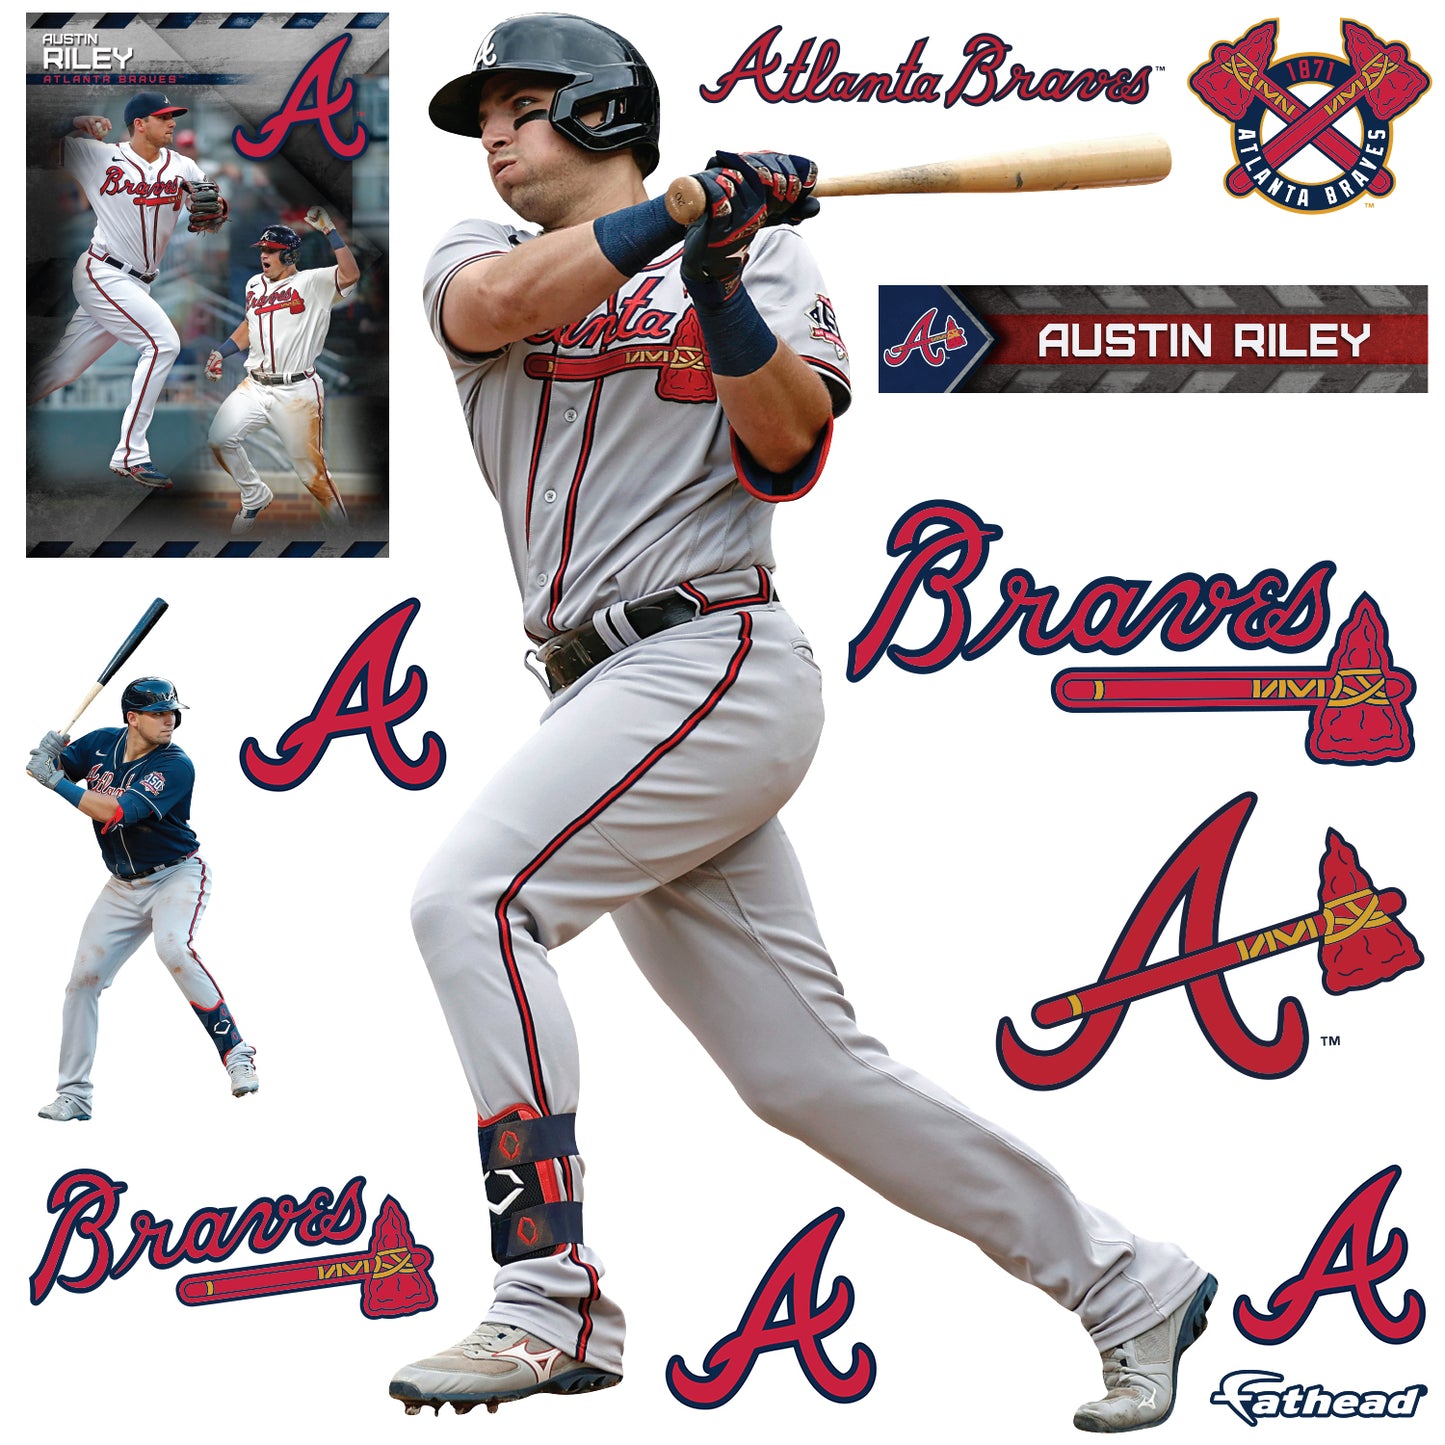 Atlanta Braves: Austin Riley 2021 - Officially Licensed MLB